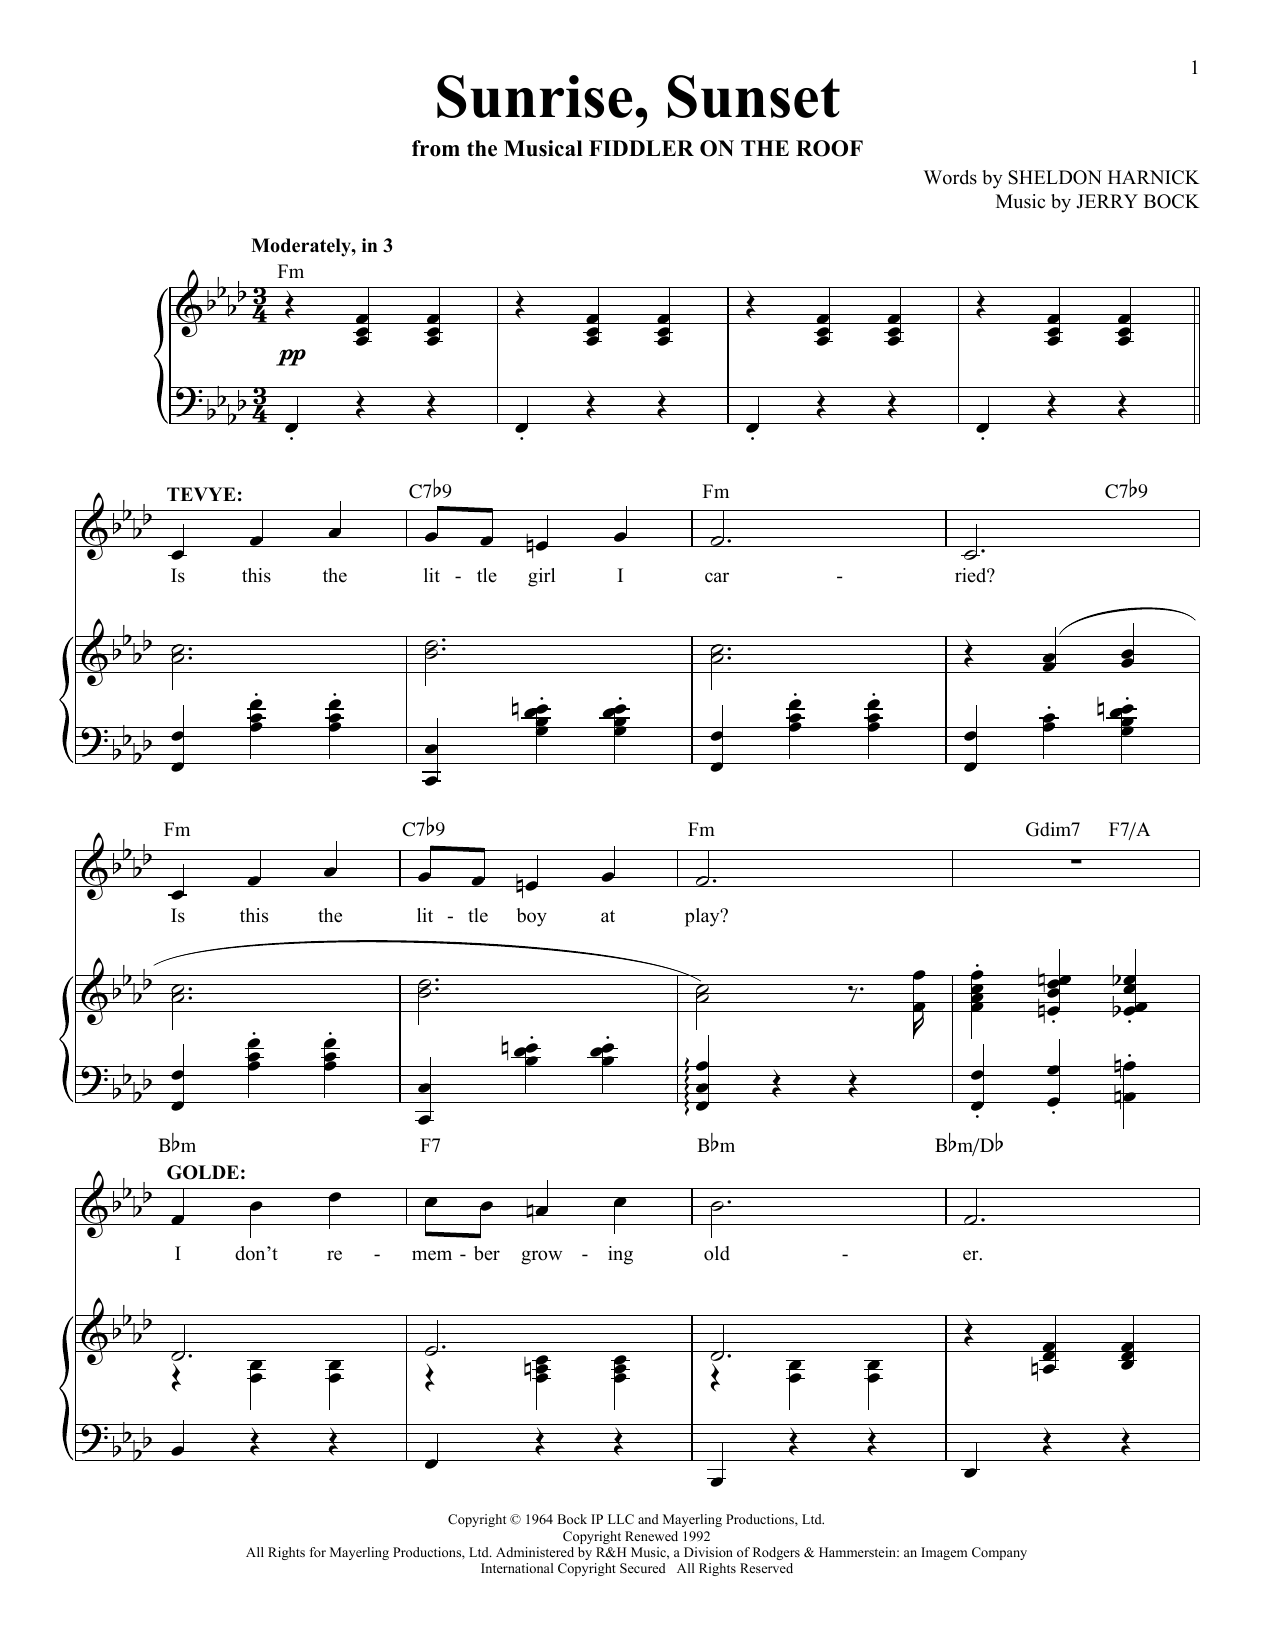 Jerry Bock Sunrise, Sunset Sheet Music Notes & Chords for Viola - Download or Print PDF